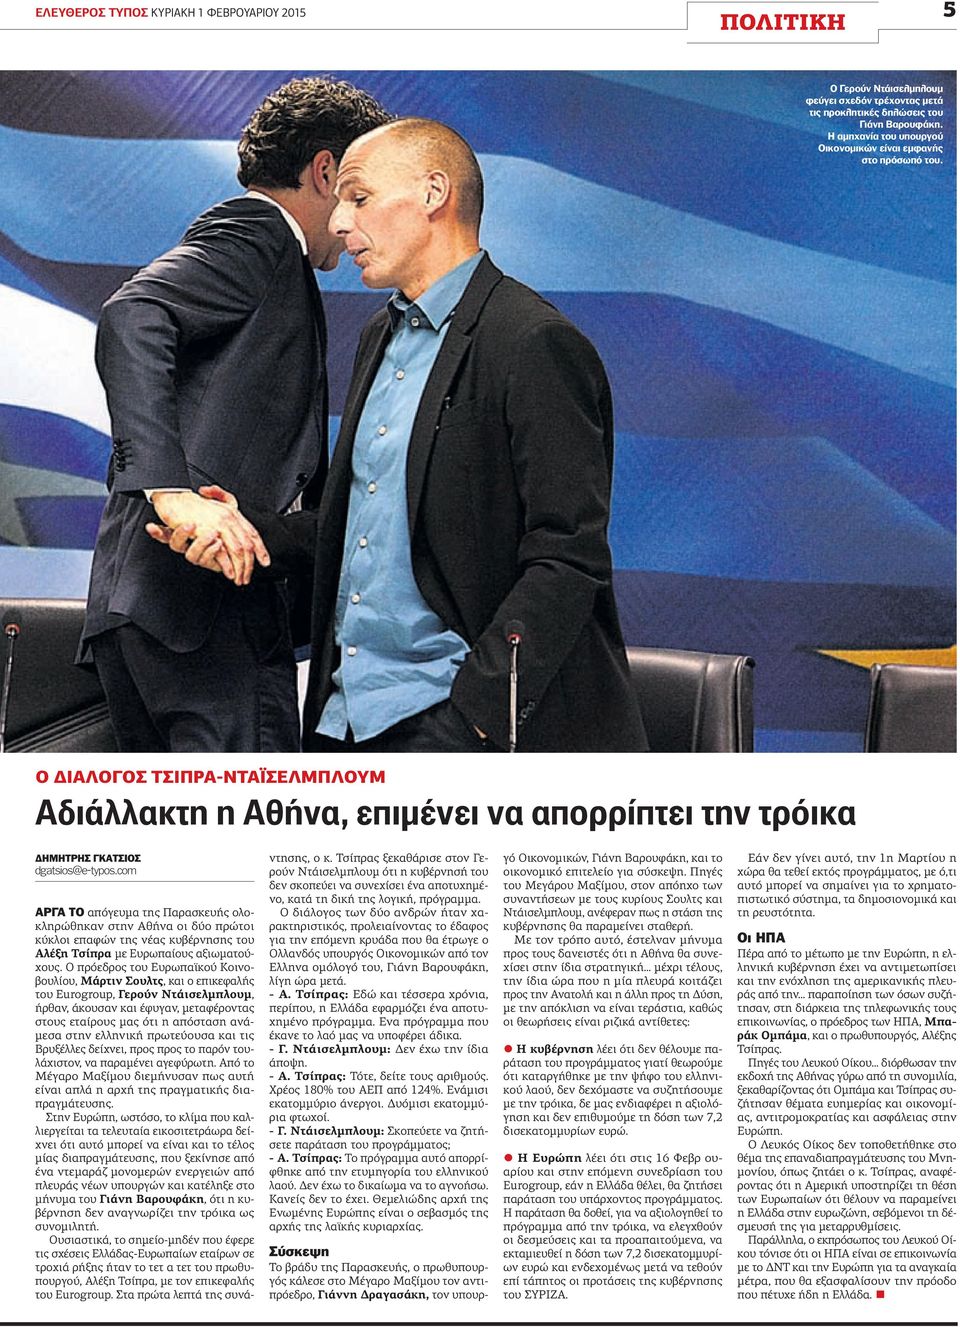 com Αργά το απόγευμα της Παρασκευής ολοκληρώθηκαν στην Αθήνα οι δύο πρώτοι κύκλοι επαφών της νέας κυβέρνησης του Αλέξη Τσίπρα με Ευρωπαίους αξιωματούχους.